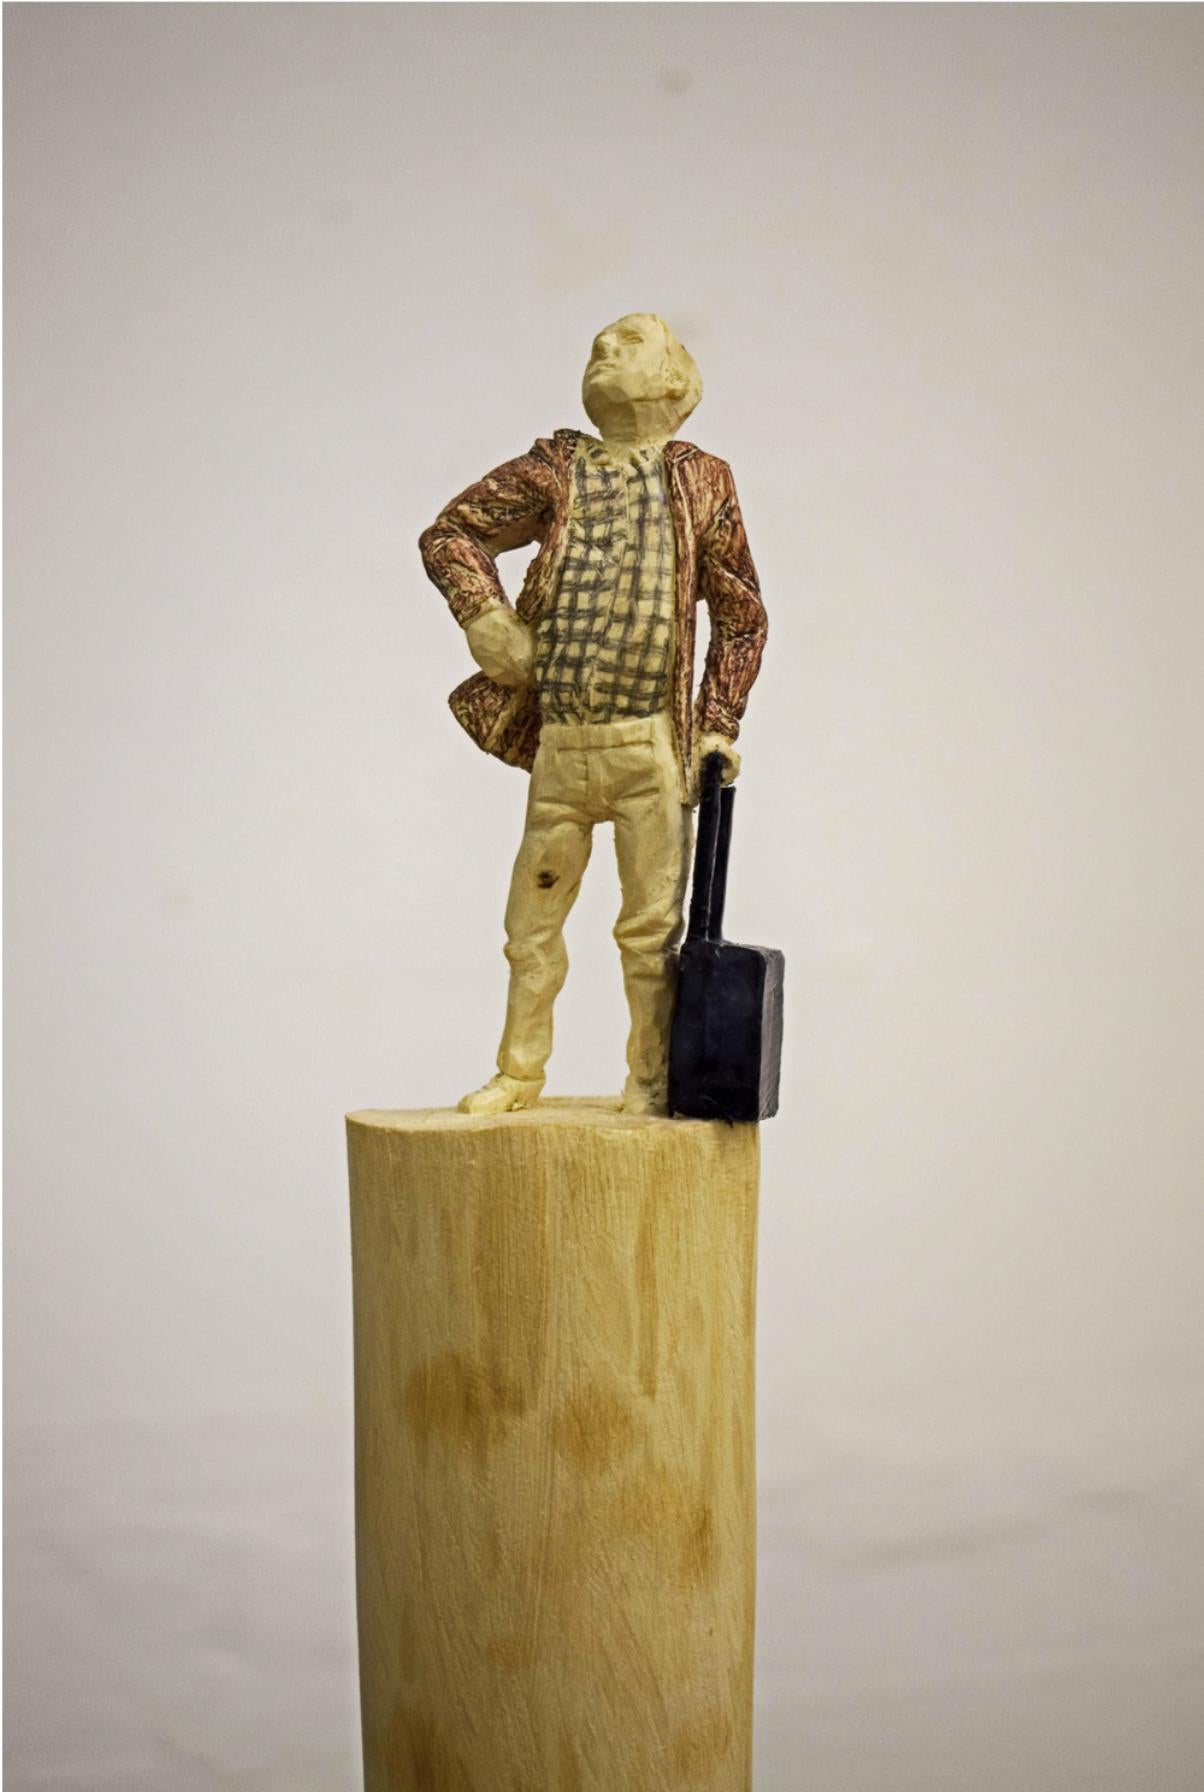 Philipp Liehr Figurative Sculpture - The Traveler - Wood sculpture, figurative sculpture, wood carving